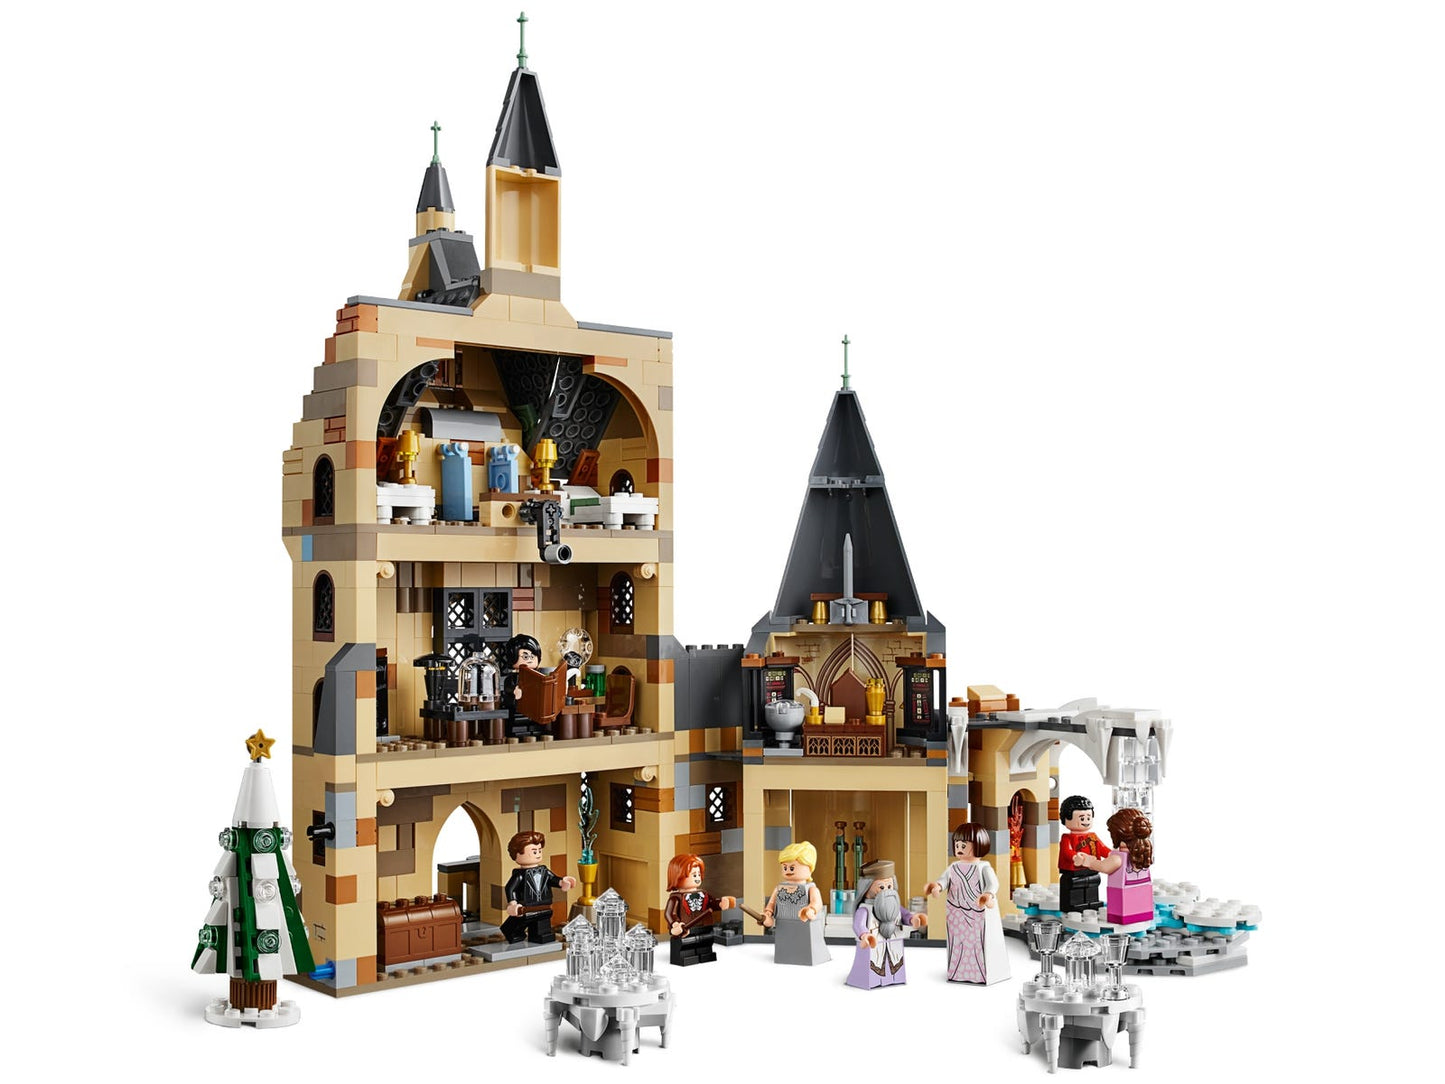 LEGO Harry Potter Hogwarts Clock Tower 75948